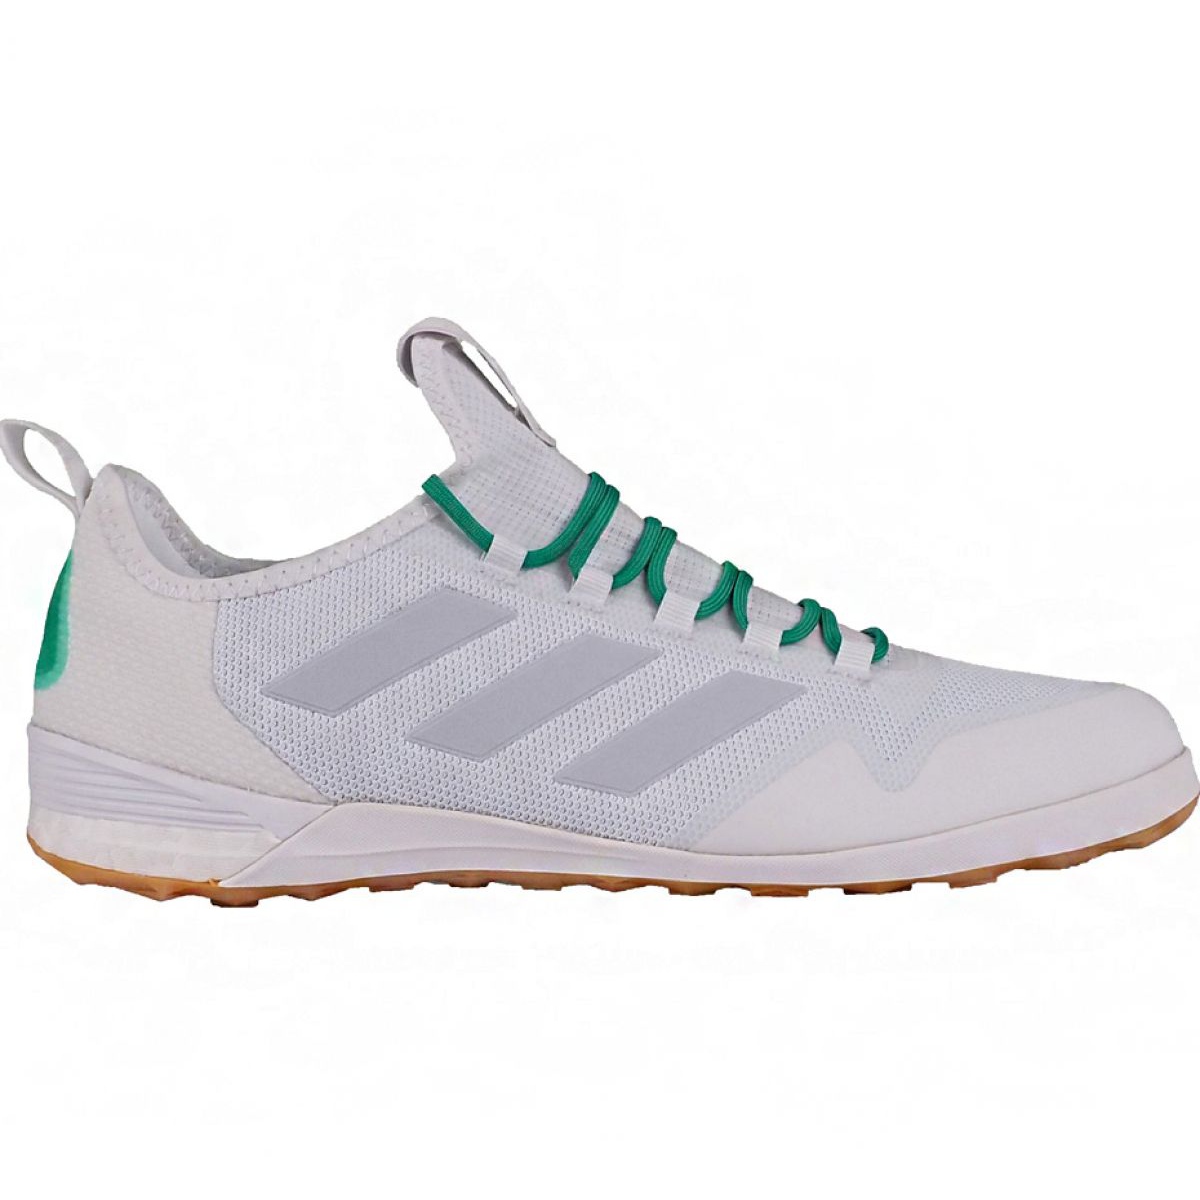 Adidas Tango 17.1 M BA8538 football boots white white - KeeShoes